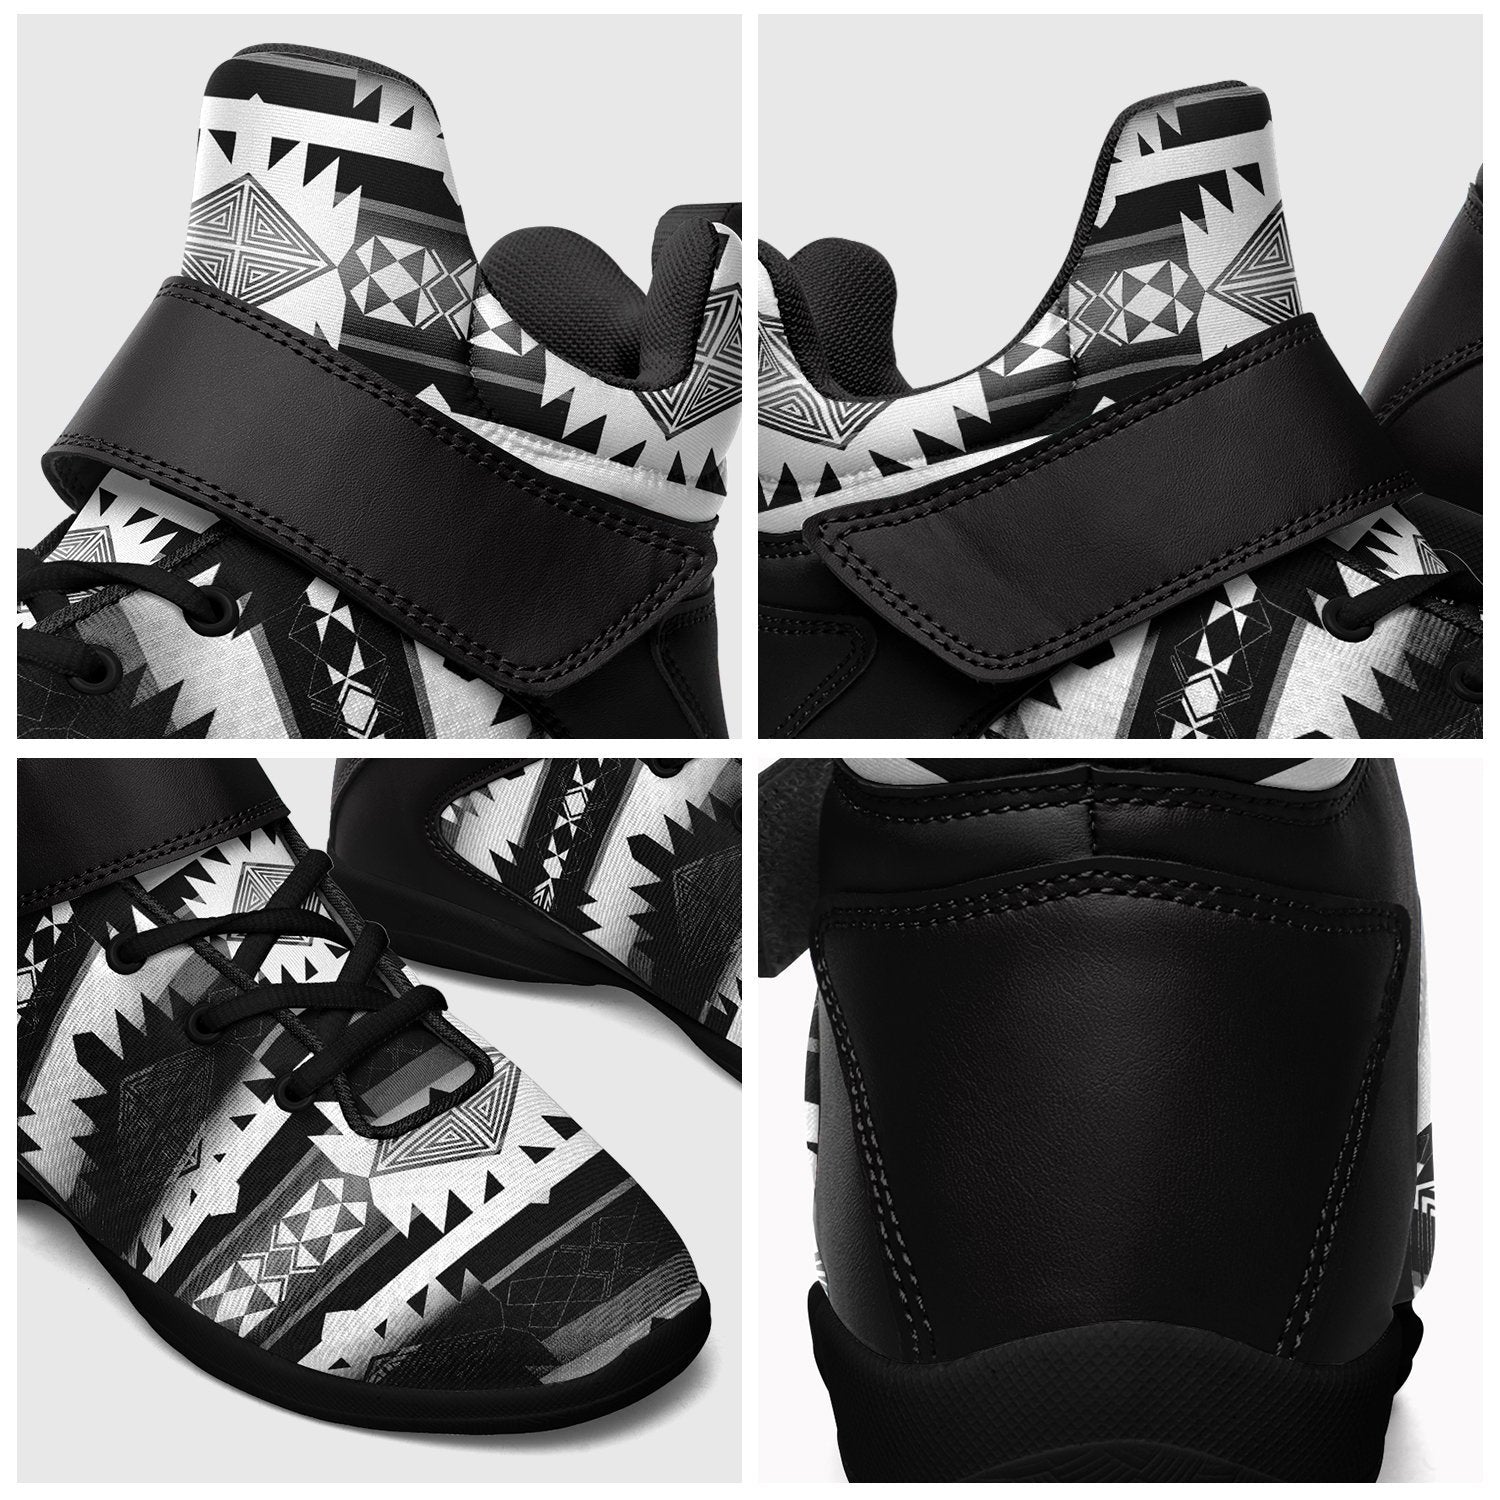 Okotoks Black and White Ipottaa Basketball / Sport High Top Shoes - Black Sole 49 Dzine 